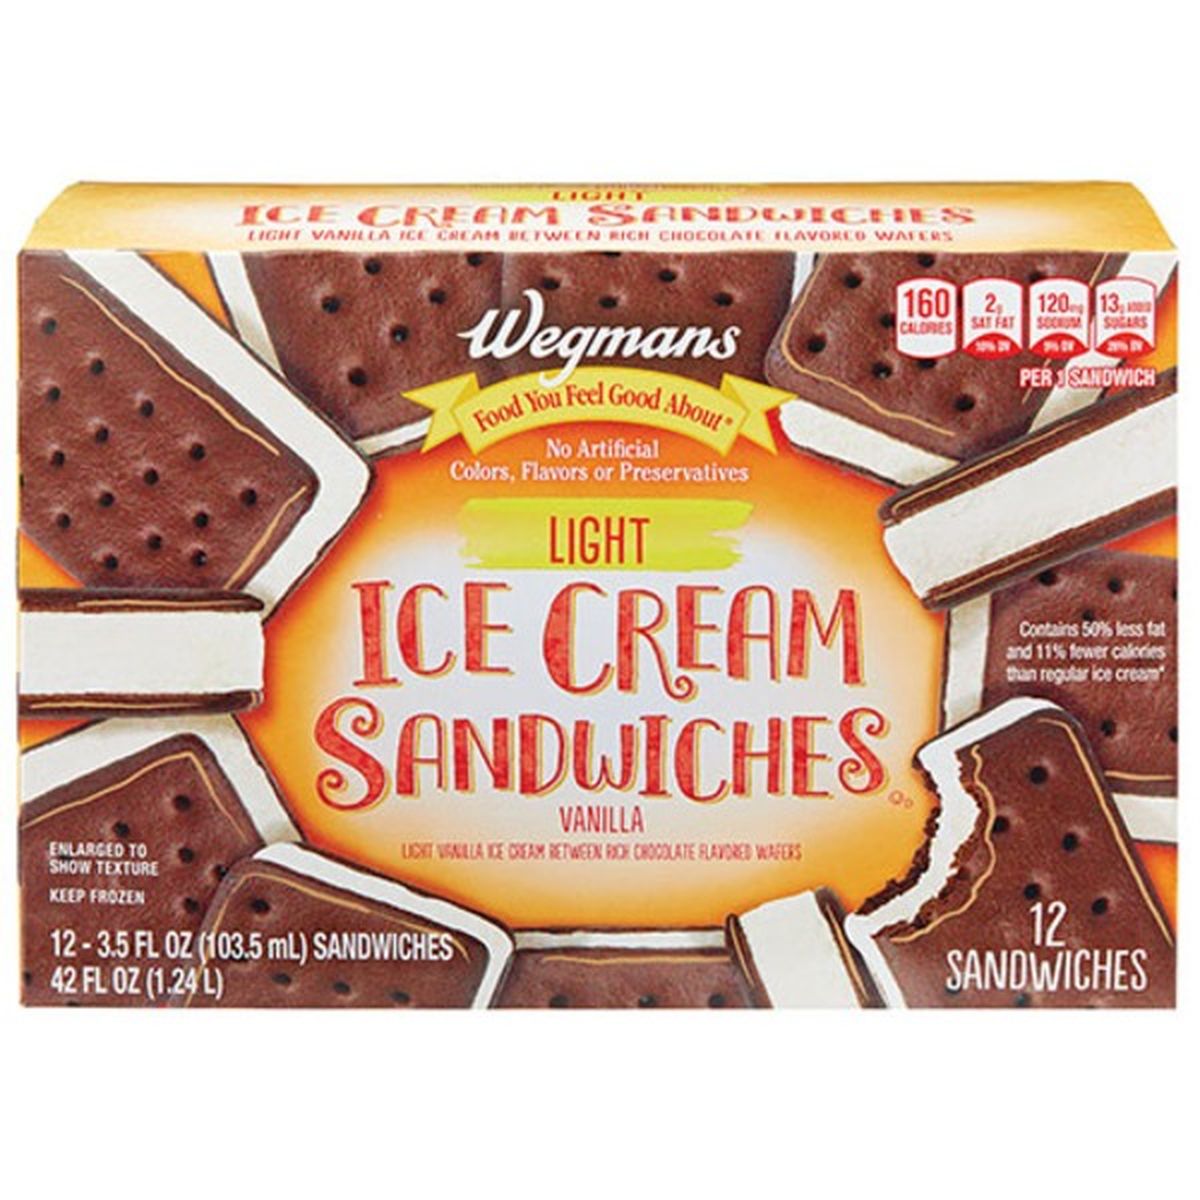 Calories in Wegmans Light Ice Cream Sandwiches, 12 Count